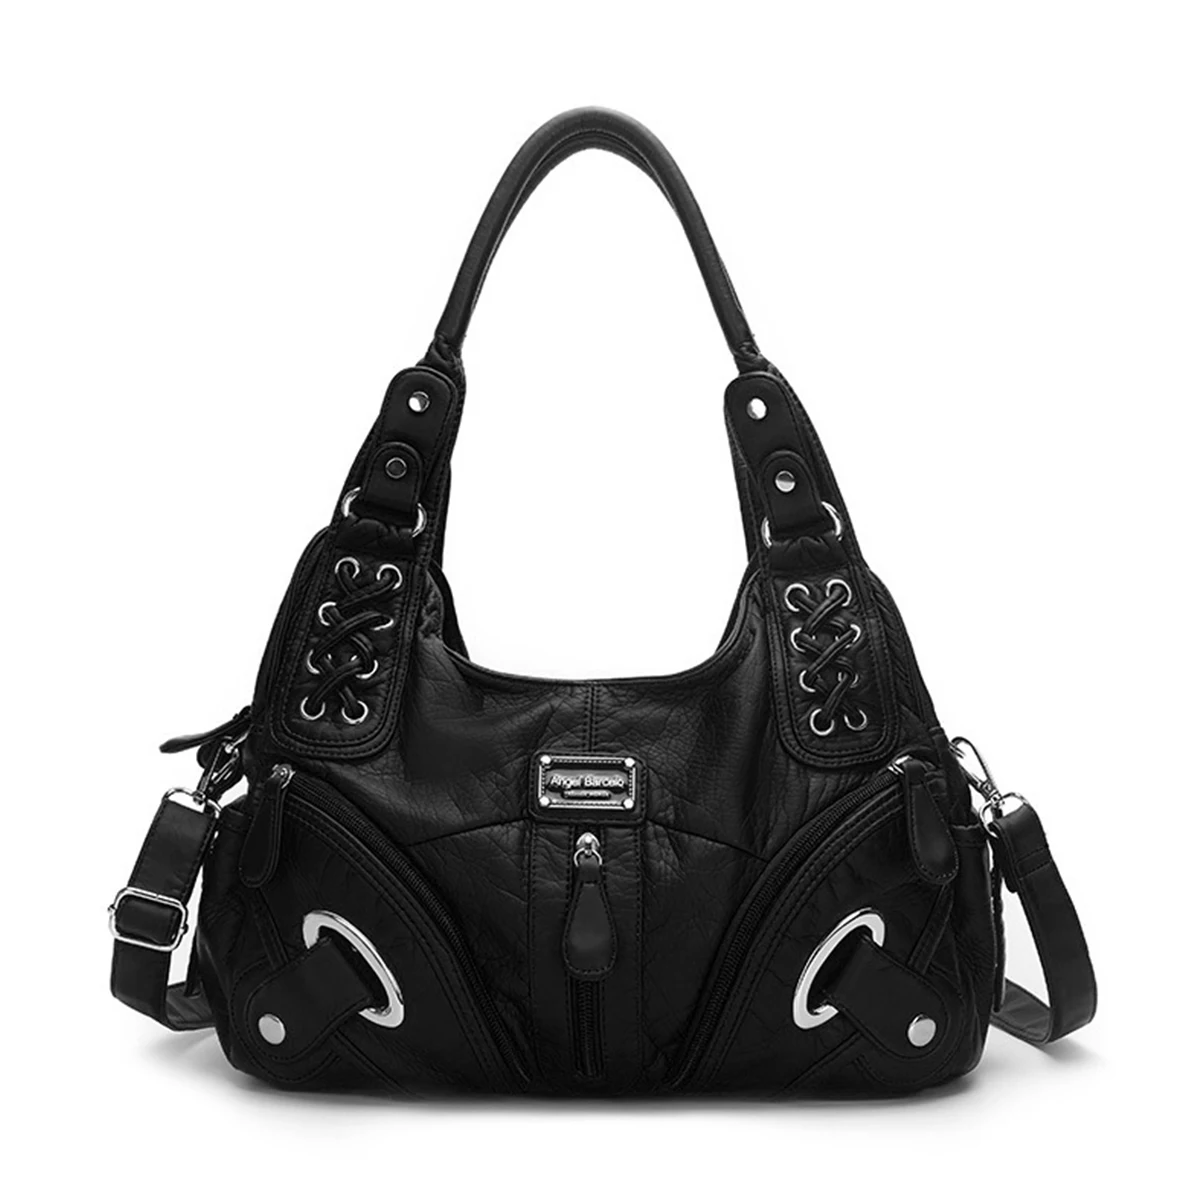 

NICOLE&DORIS Women Handbag PU Soft Leather Hobo Shoulder Bags Tote Satchel Bag Large Capacity Shopping Crossbody Bag